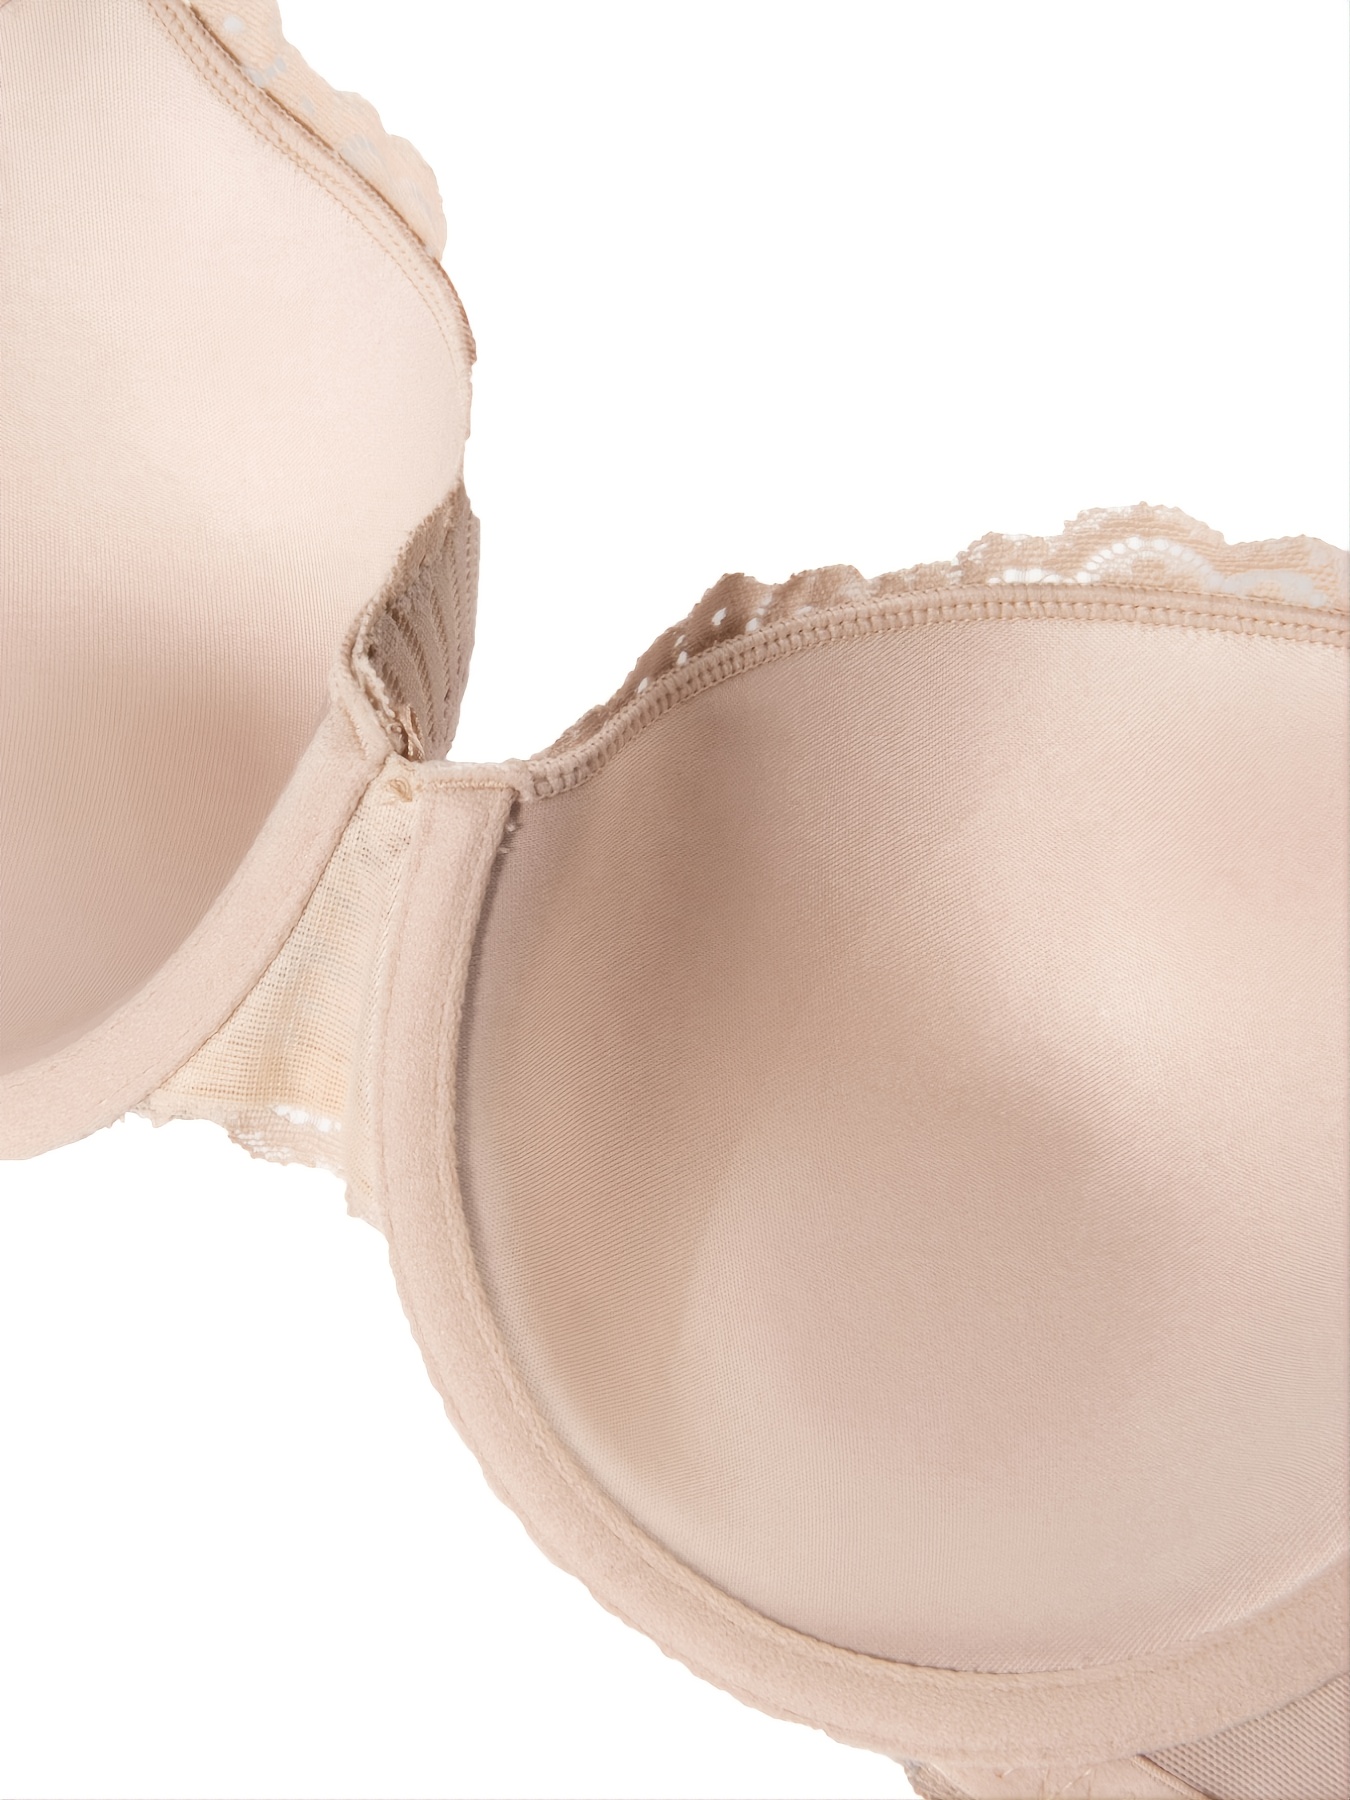 Womens Low Cut Bra Underwear Bralette Crop Top Push Up Brassiere Deep V  Unpadded - Lace Underwire, Mesh Band, 80% Nylon, 20% Spandex